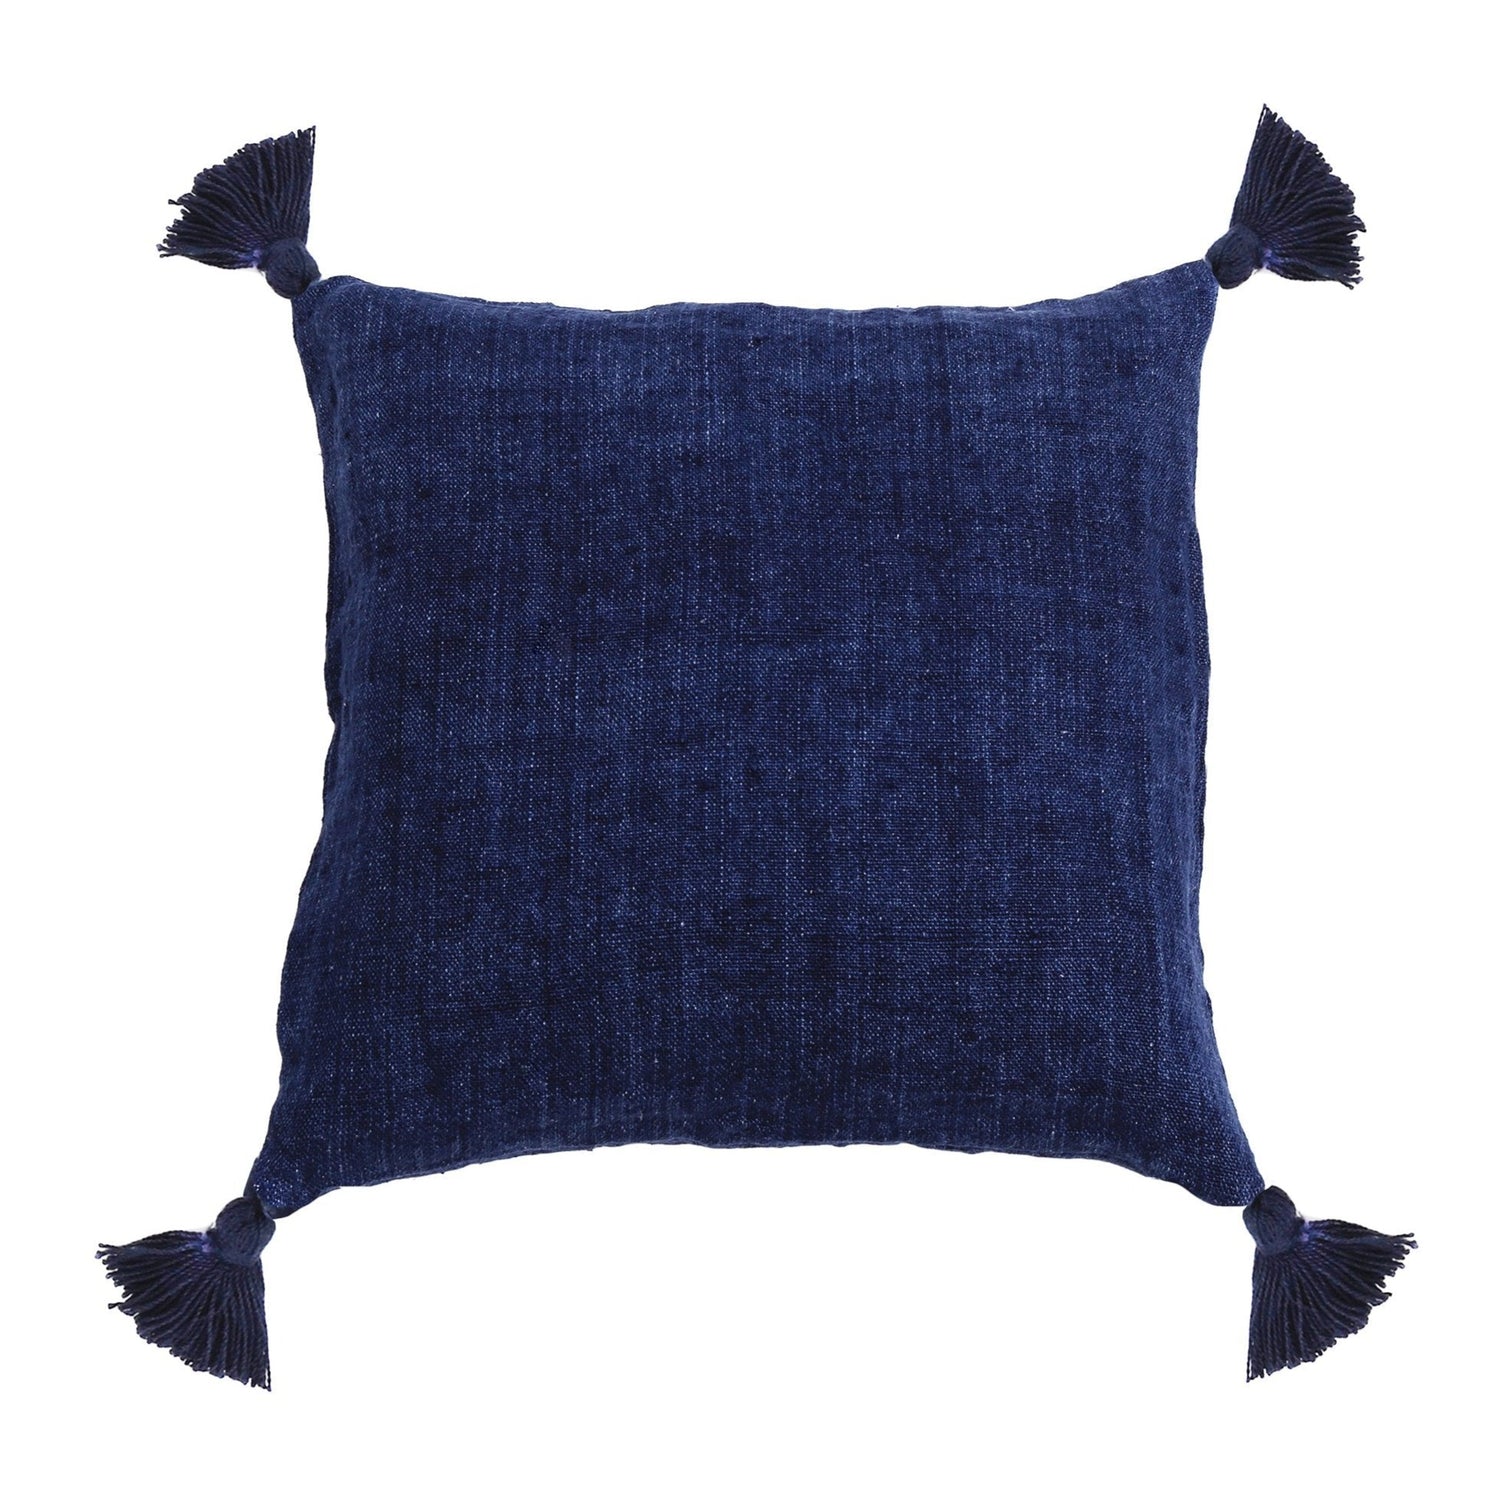 Montauk Square Pillow with Tassels, Indigo